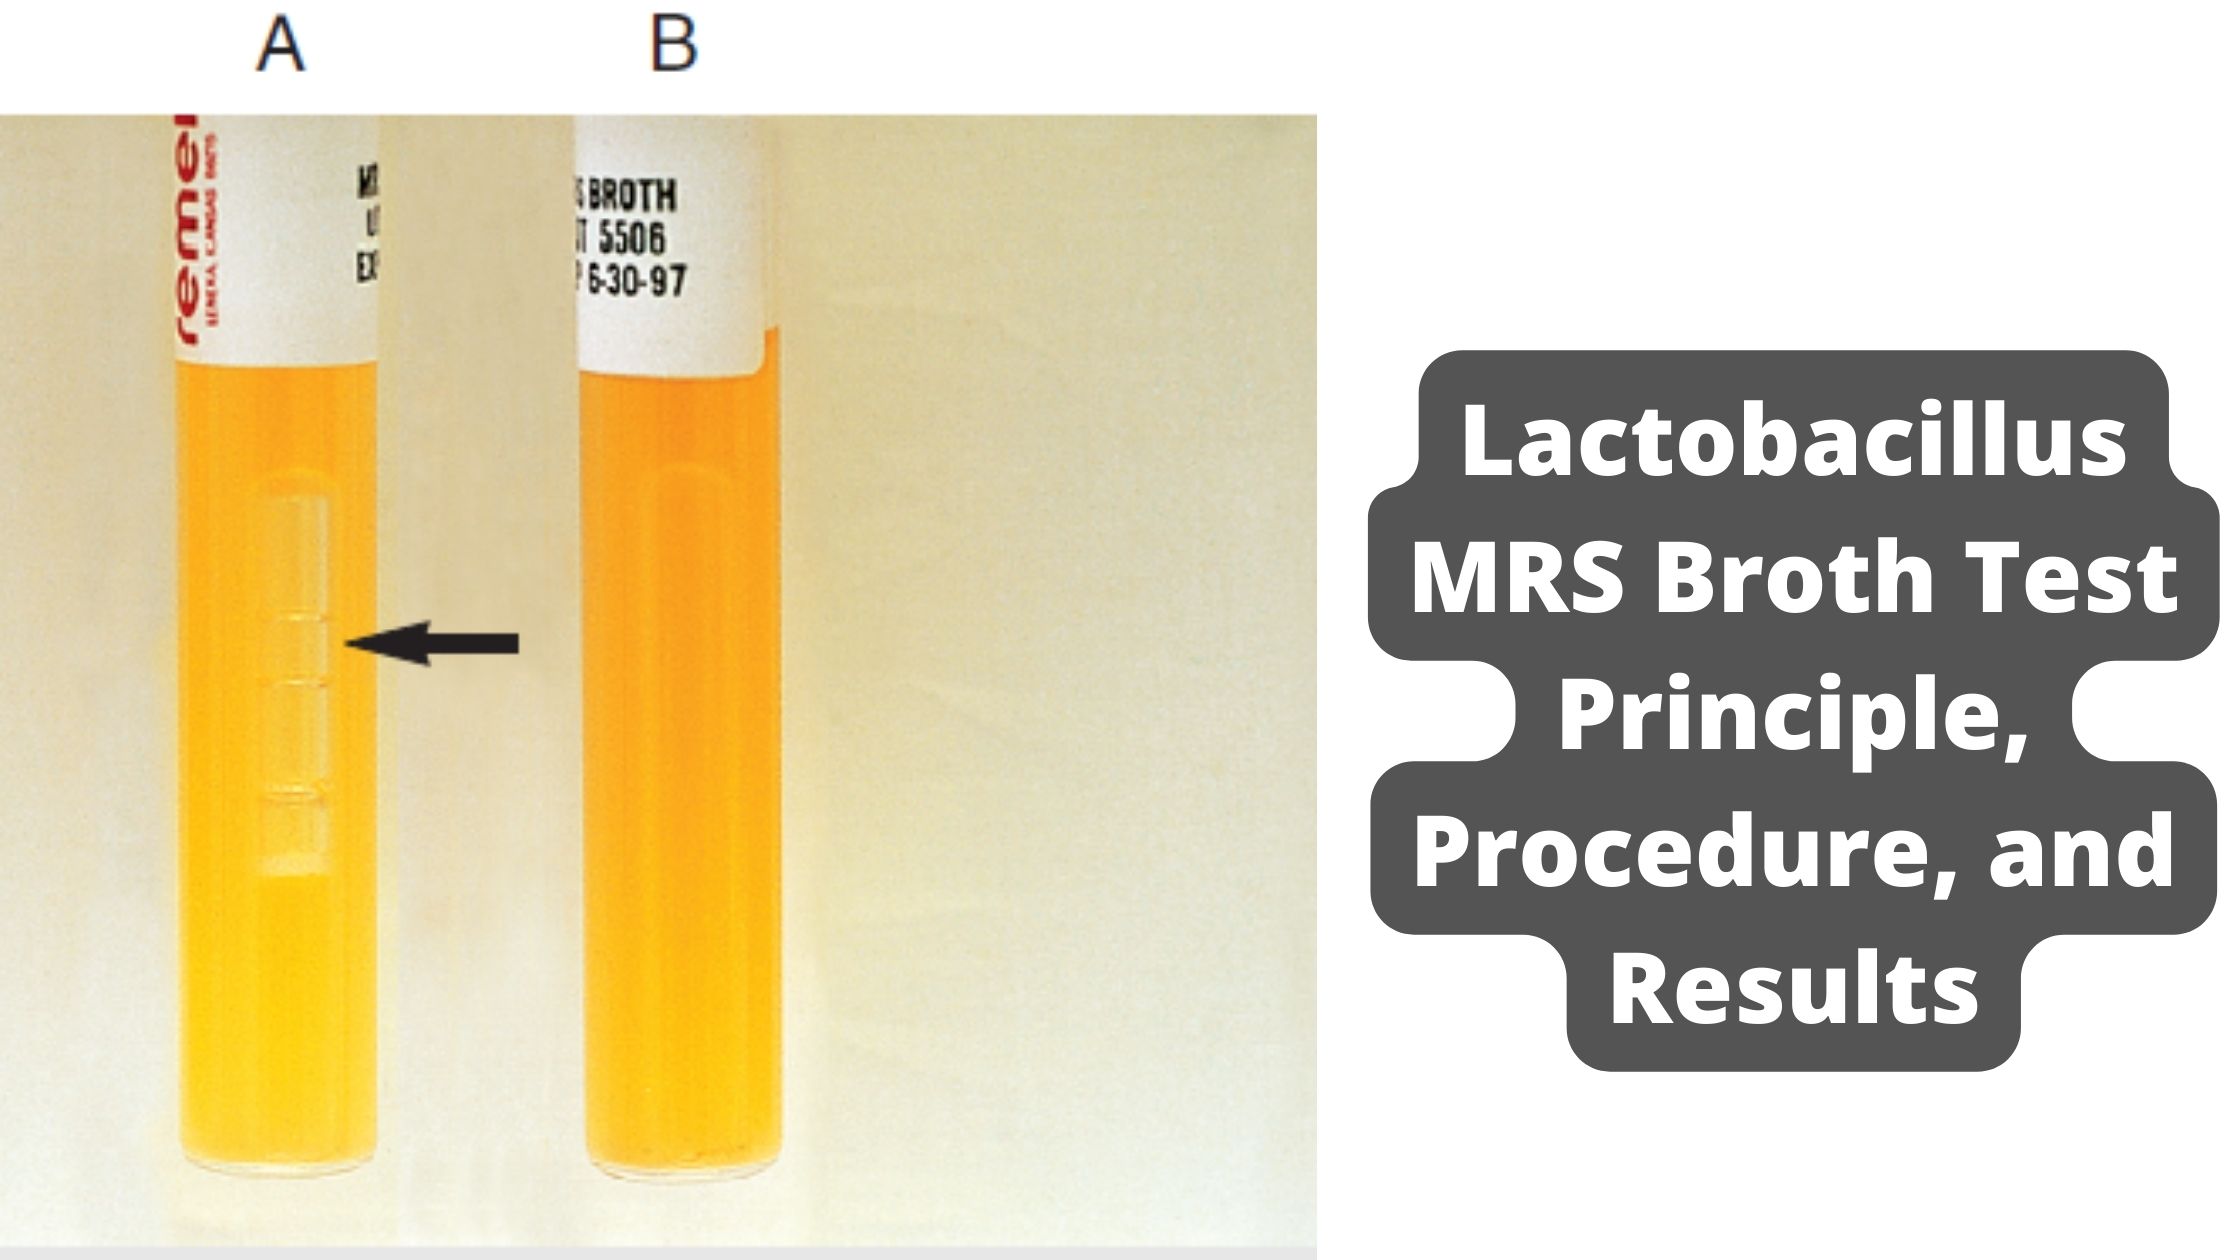 Lactobacillus MRS Broth Test Principle, Procedure, and Results